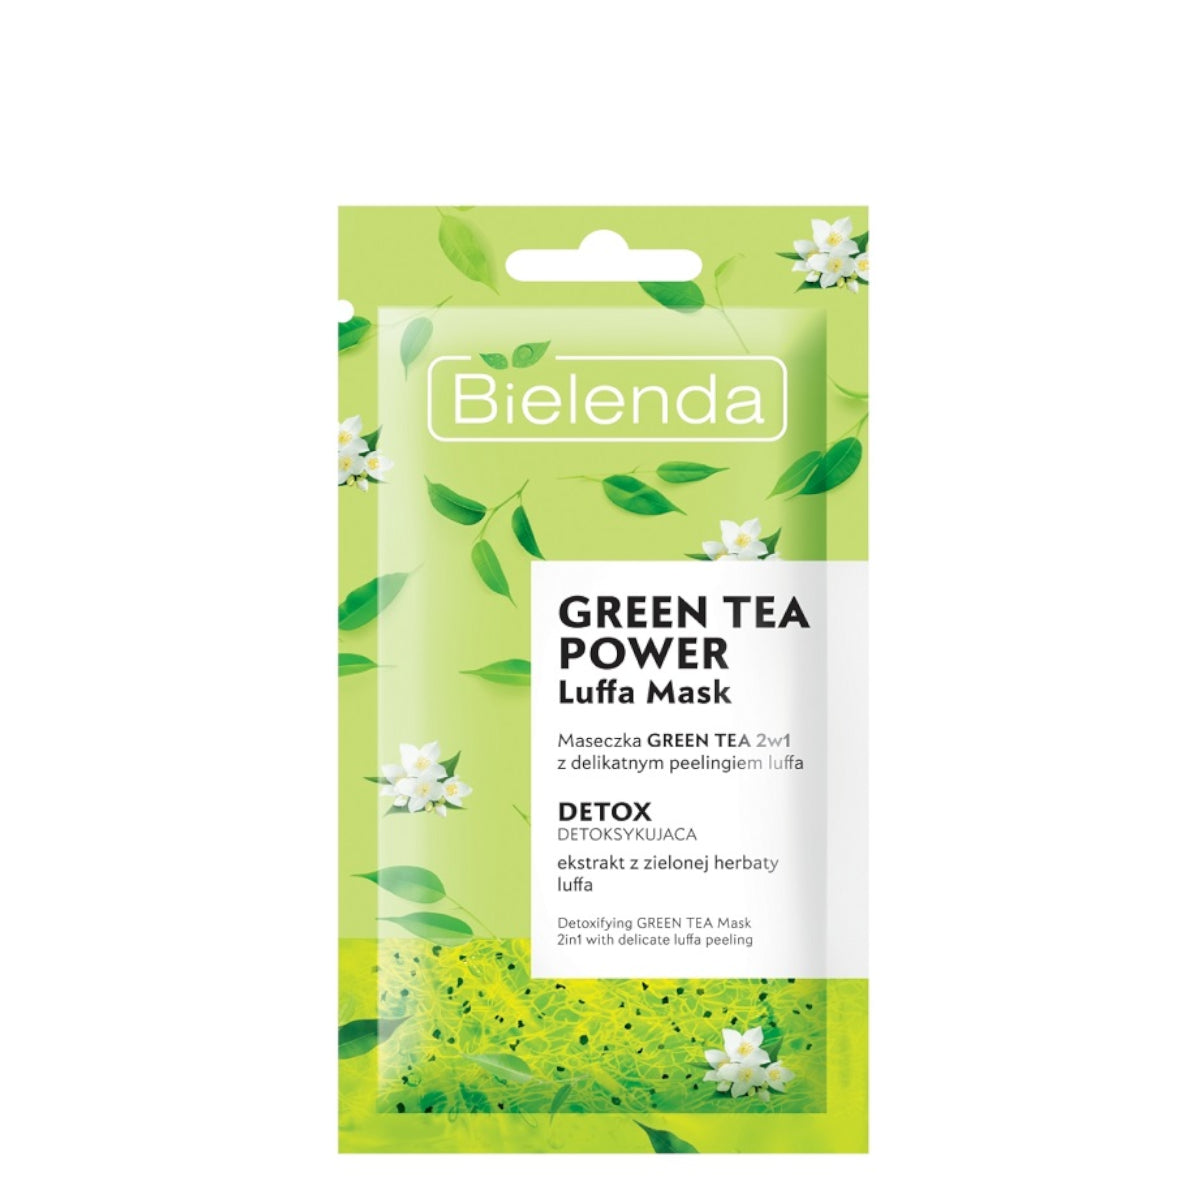 Bielenda Luffa Mask Detoxifying Green Tea Face Mask 2in1